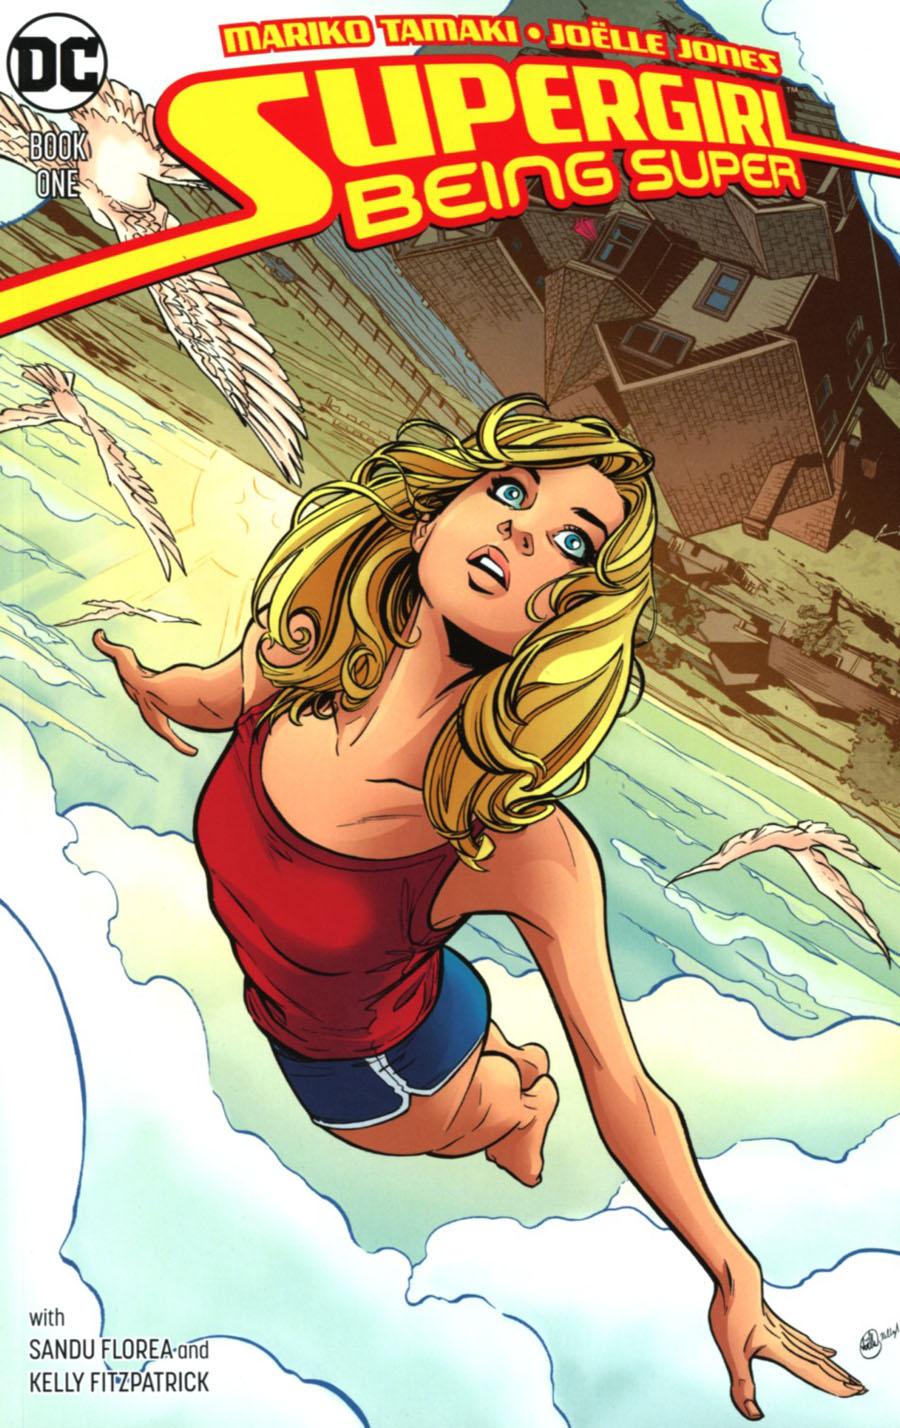 Supergirl Being Super Vol. 1 #1